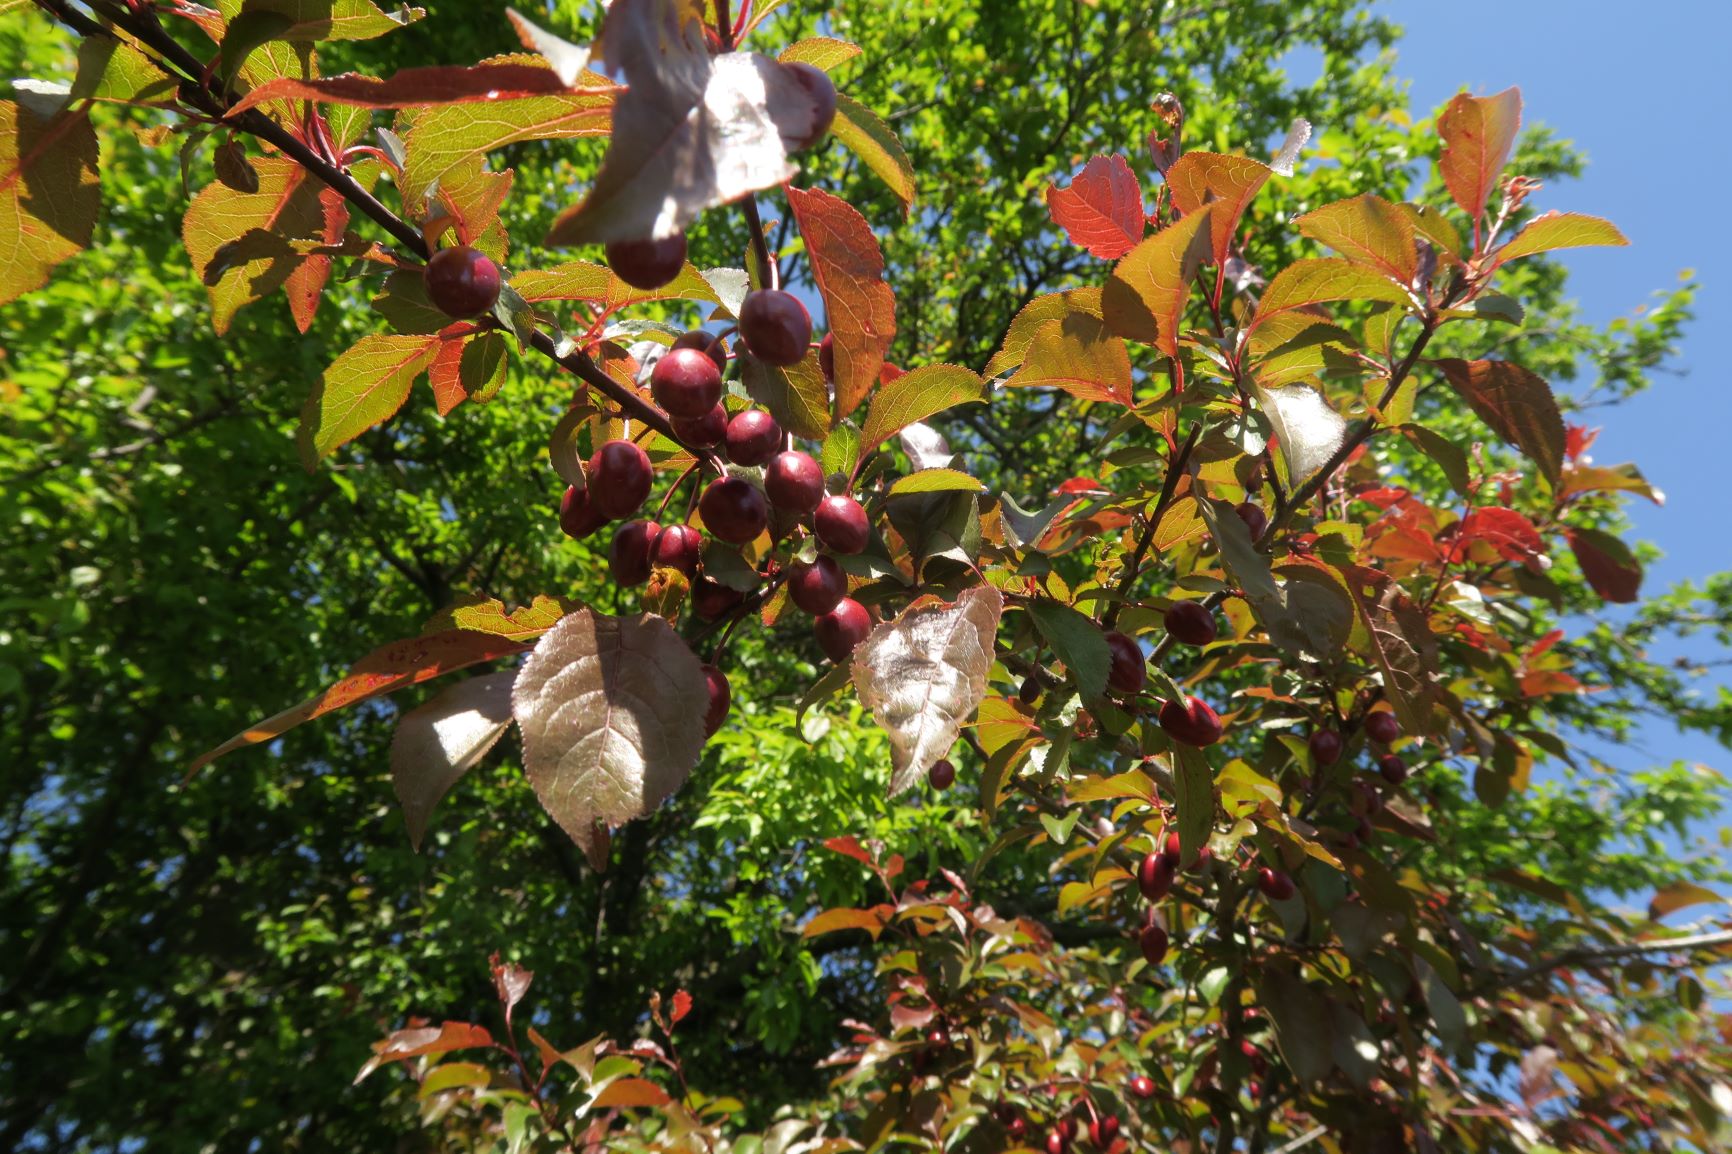 04.23 Perchtoldsdorfer Heiden Prunus Cerasifera auf Prunus domestica aufgepropft), Perchtoldsdorfer Kleine Heide 23.04.2020 C5X (2) - Kopie.JPG